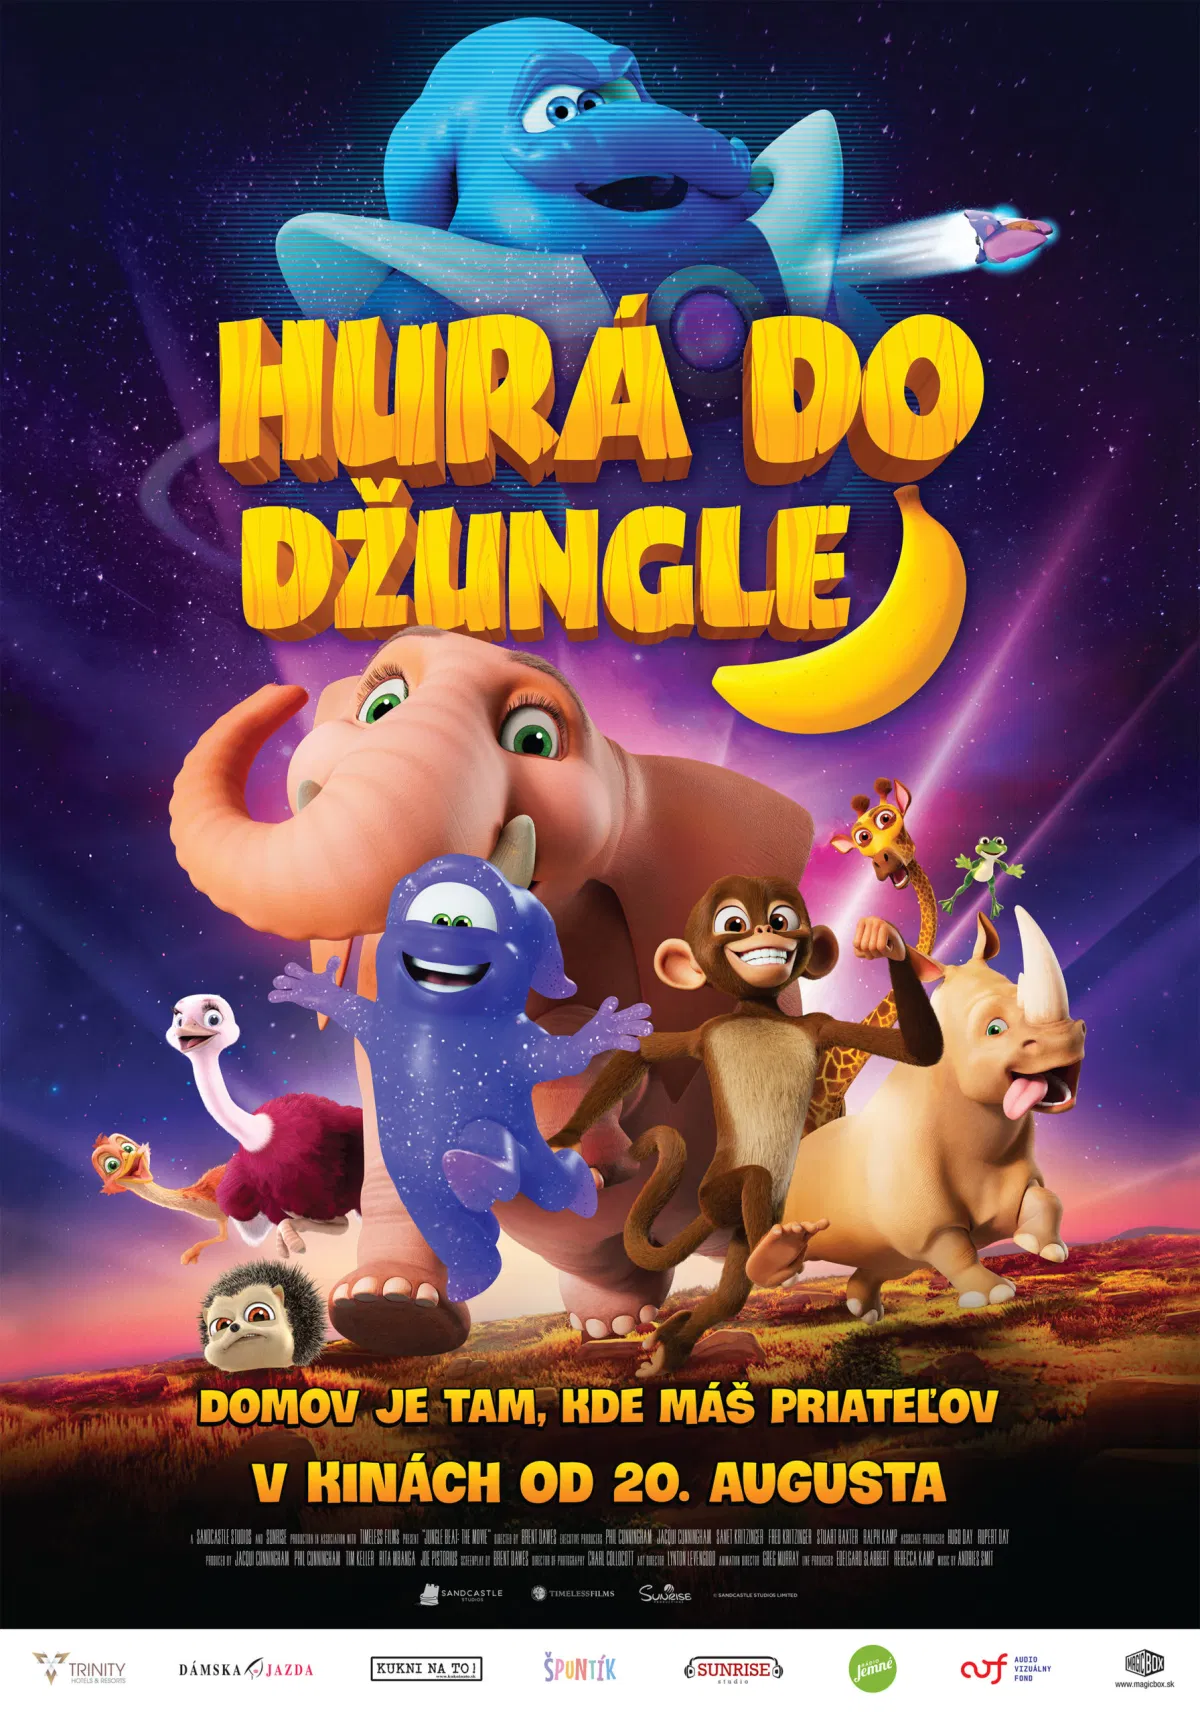 Stiahni si Filmy Kreslené Hura do dzungle / Jungle Beat: The Movie (2020)(CZ/SK)[WebRip] = CSFD 54%